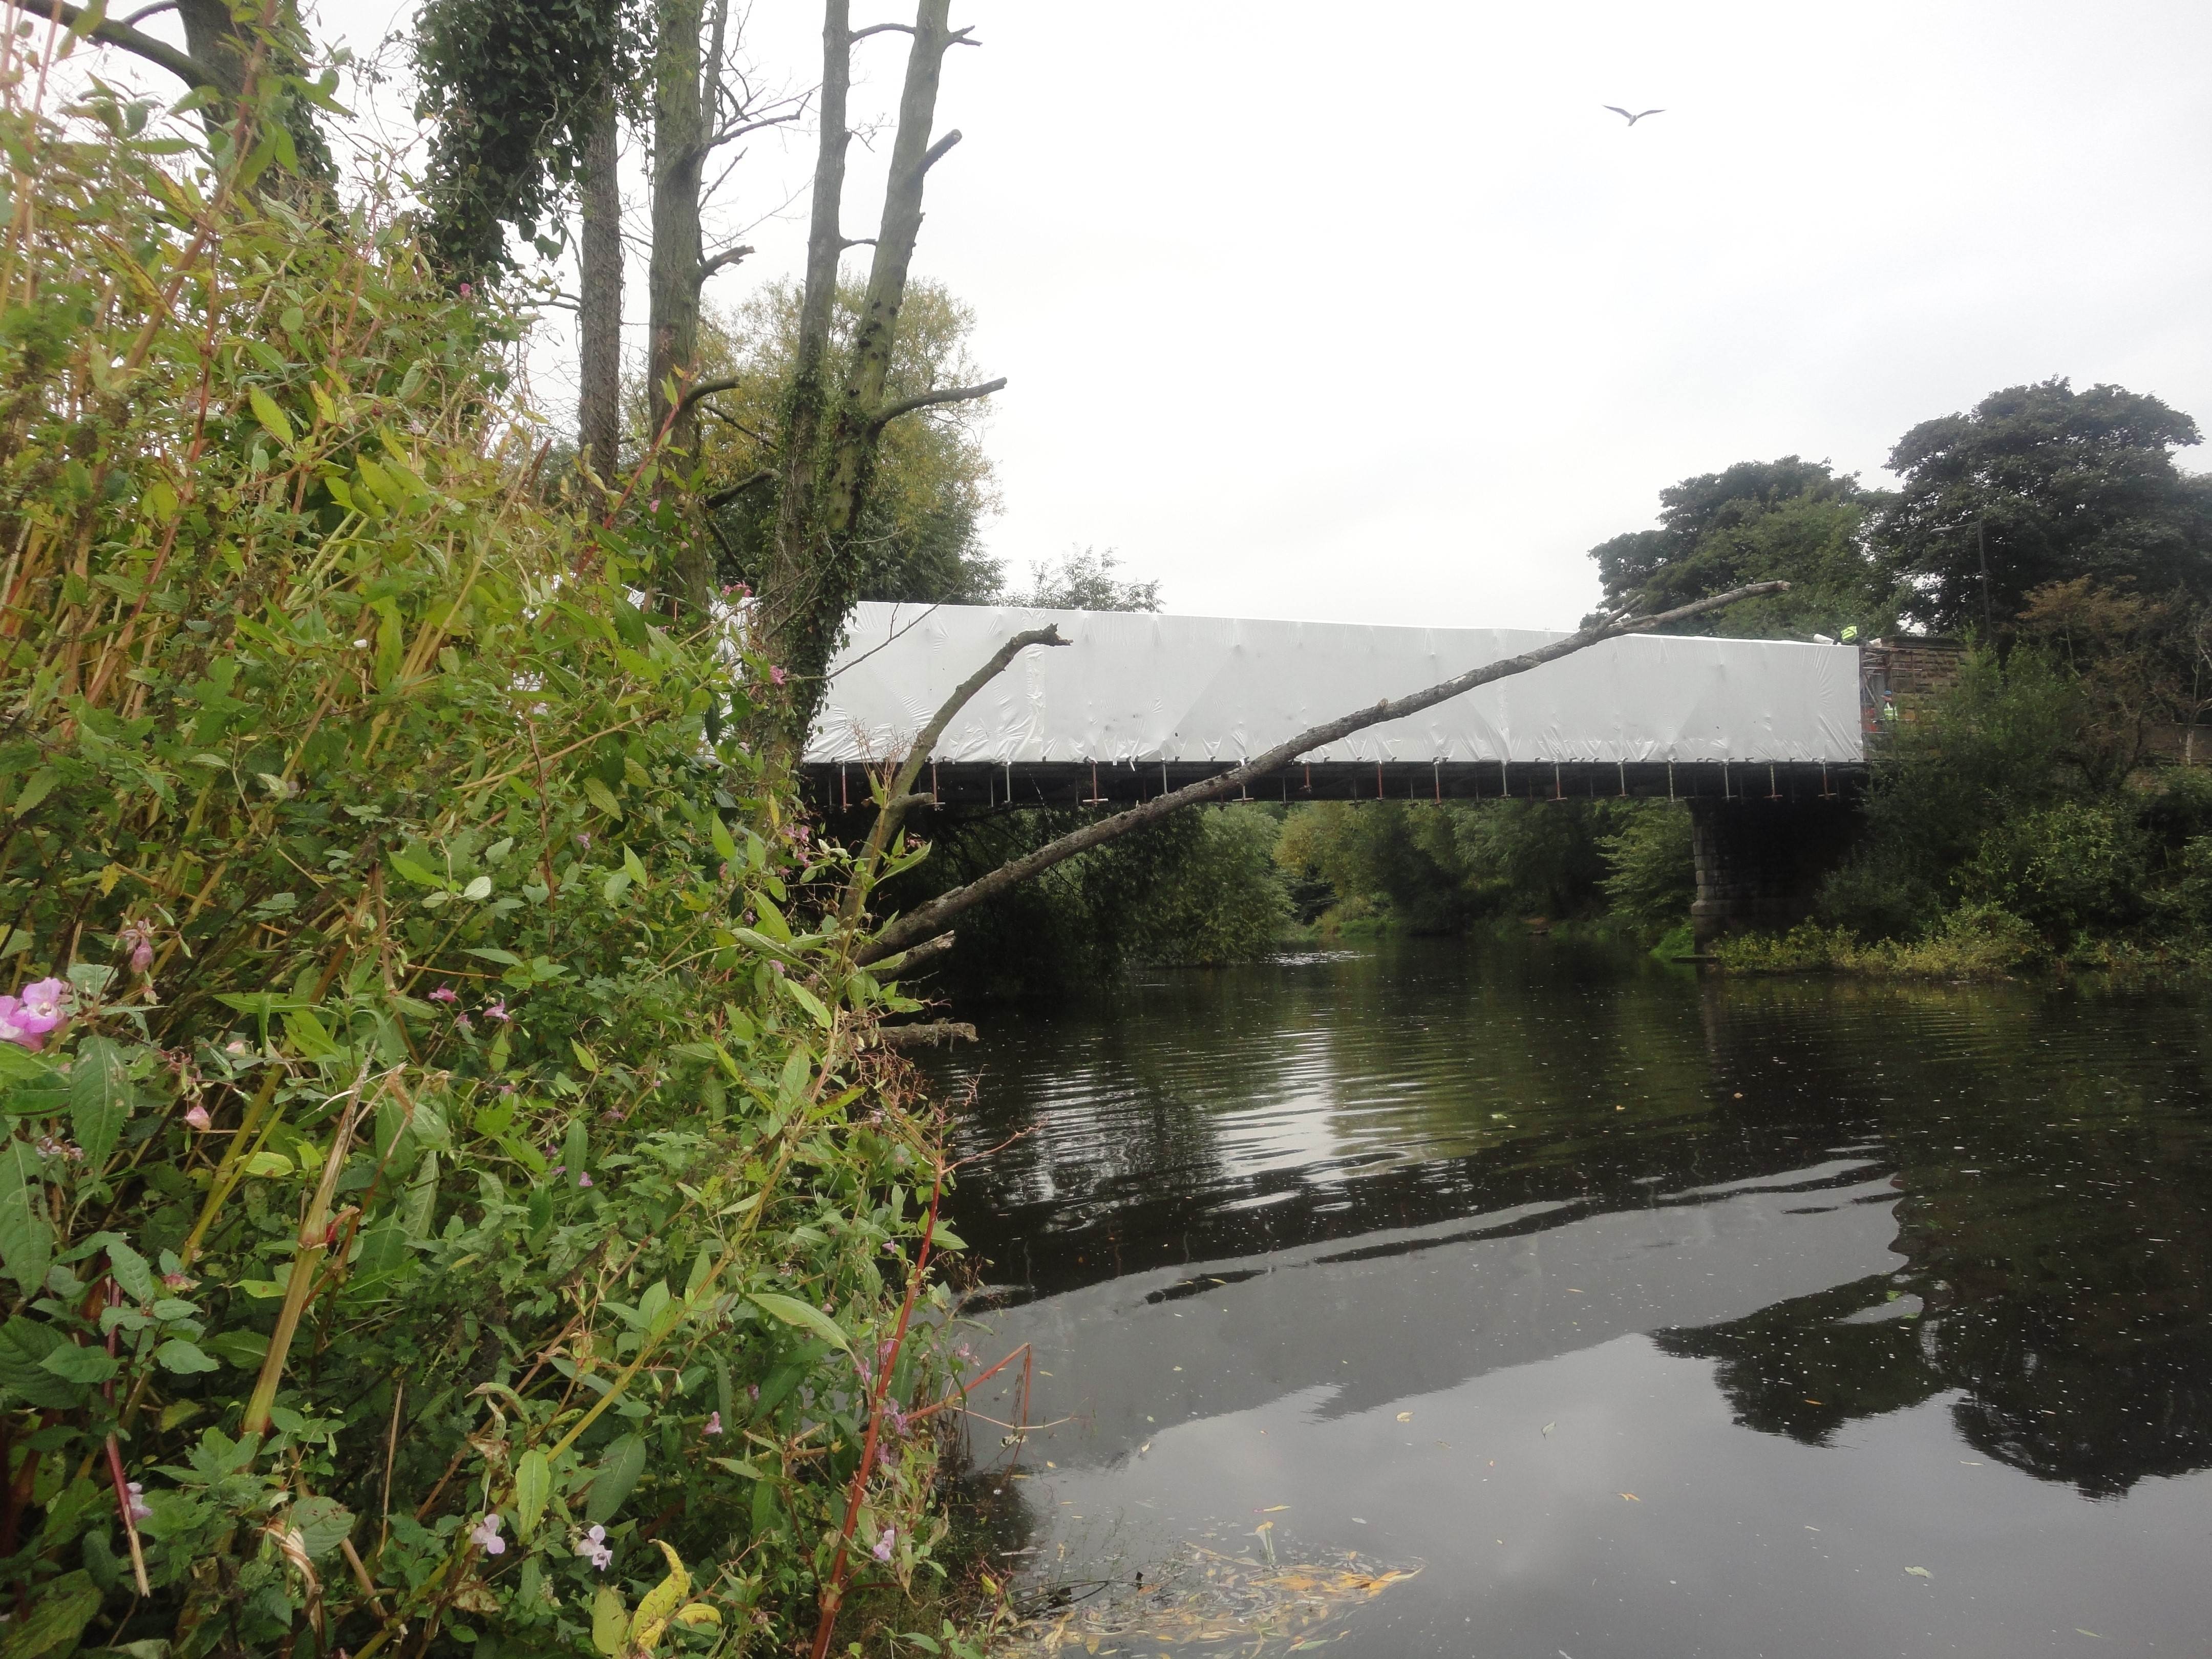 Tamworth Scaffolding: Covered Bridge - Utilities Covered Bridge
